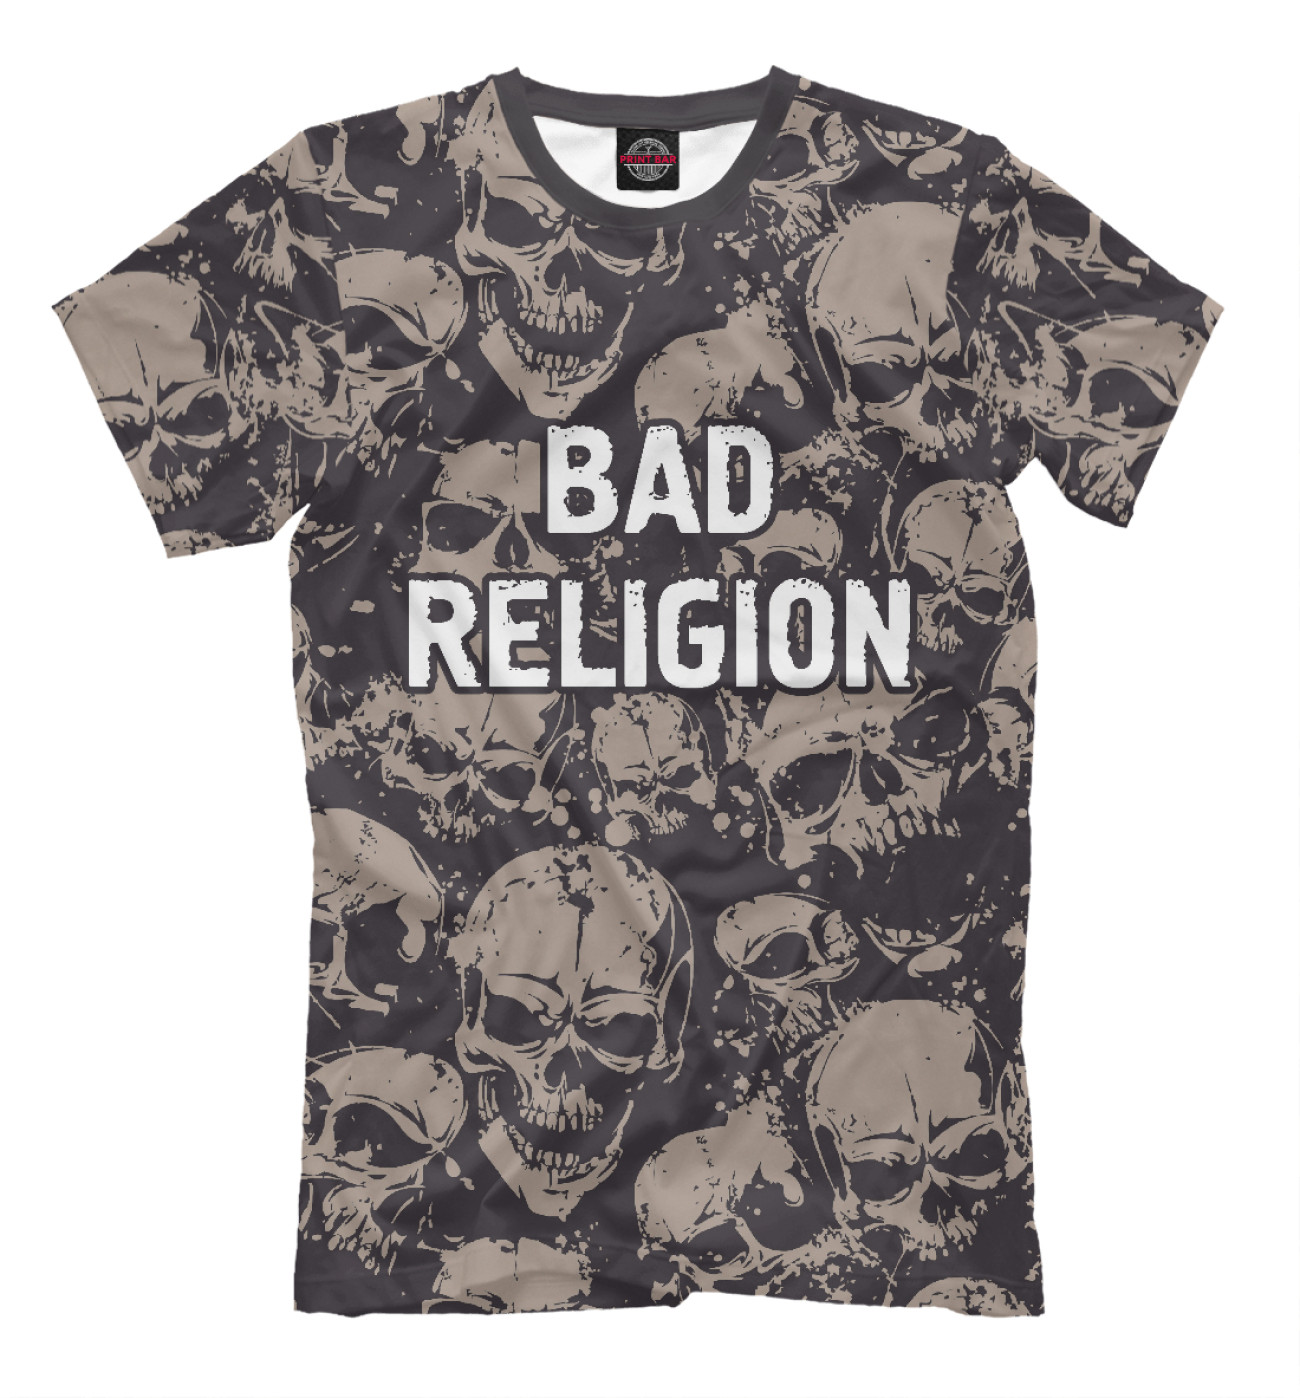 Мужская Футболка Bad Religion, артикул: BRL-218246-fut-2